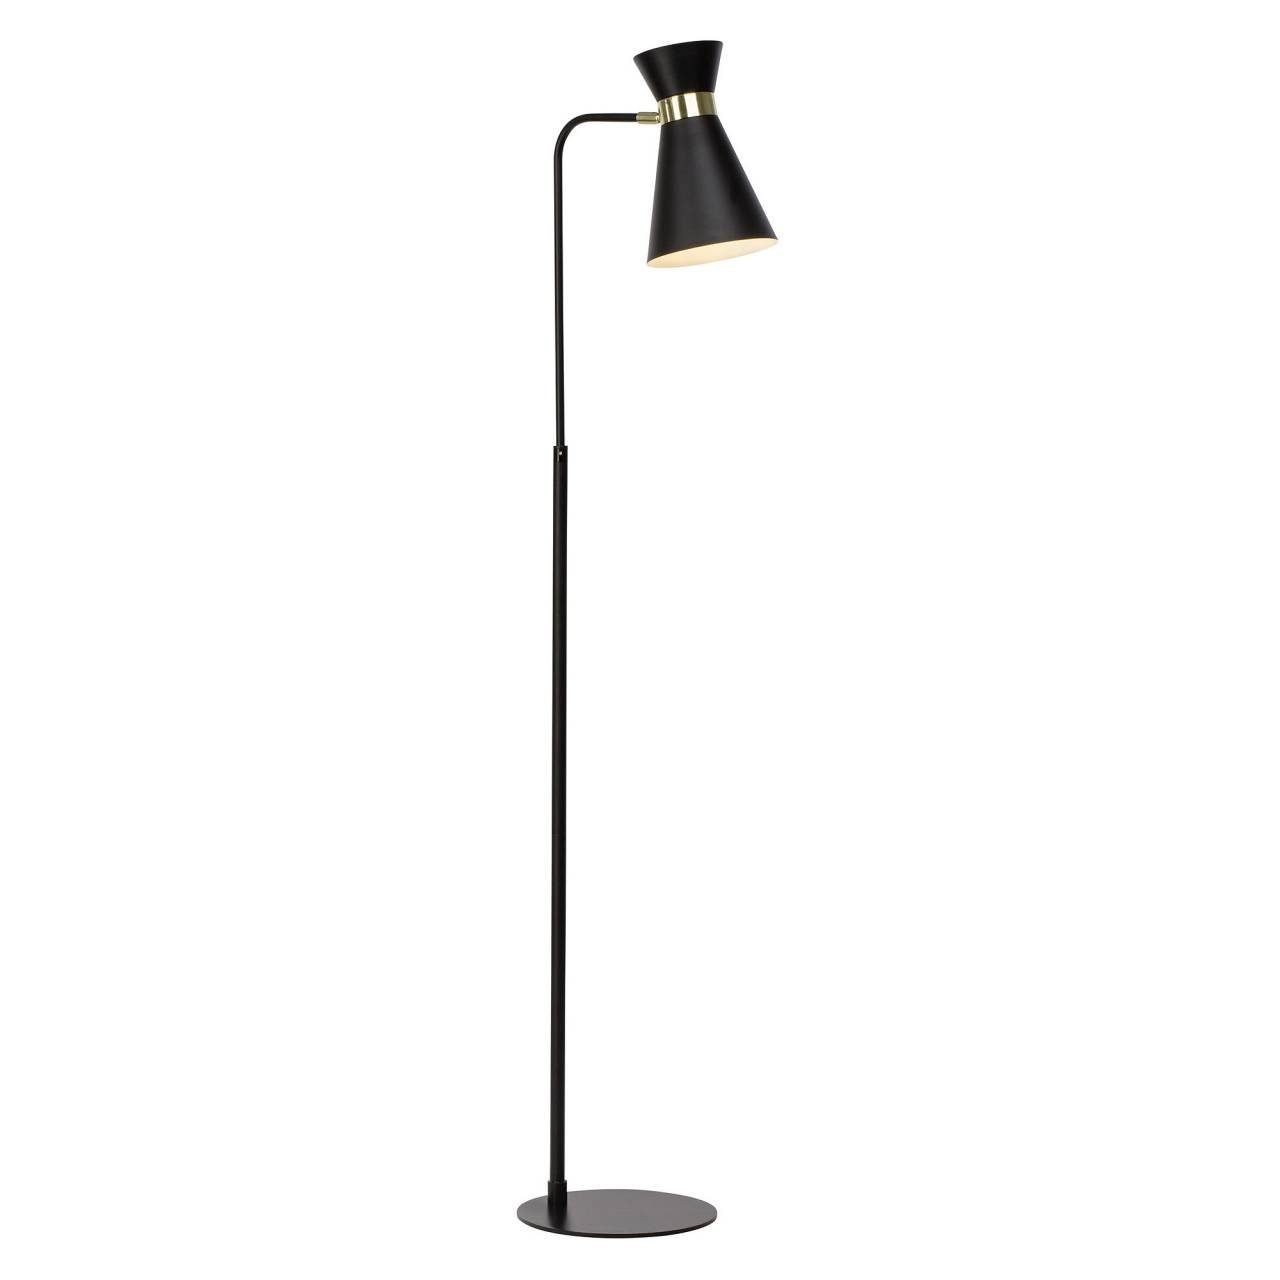 Stehlampe Brilliant A60, Standleuchte Goldy, 1x 28W, E27, schwarz-matt/gold g. 1flg Goldy Lampe